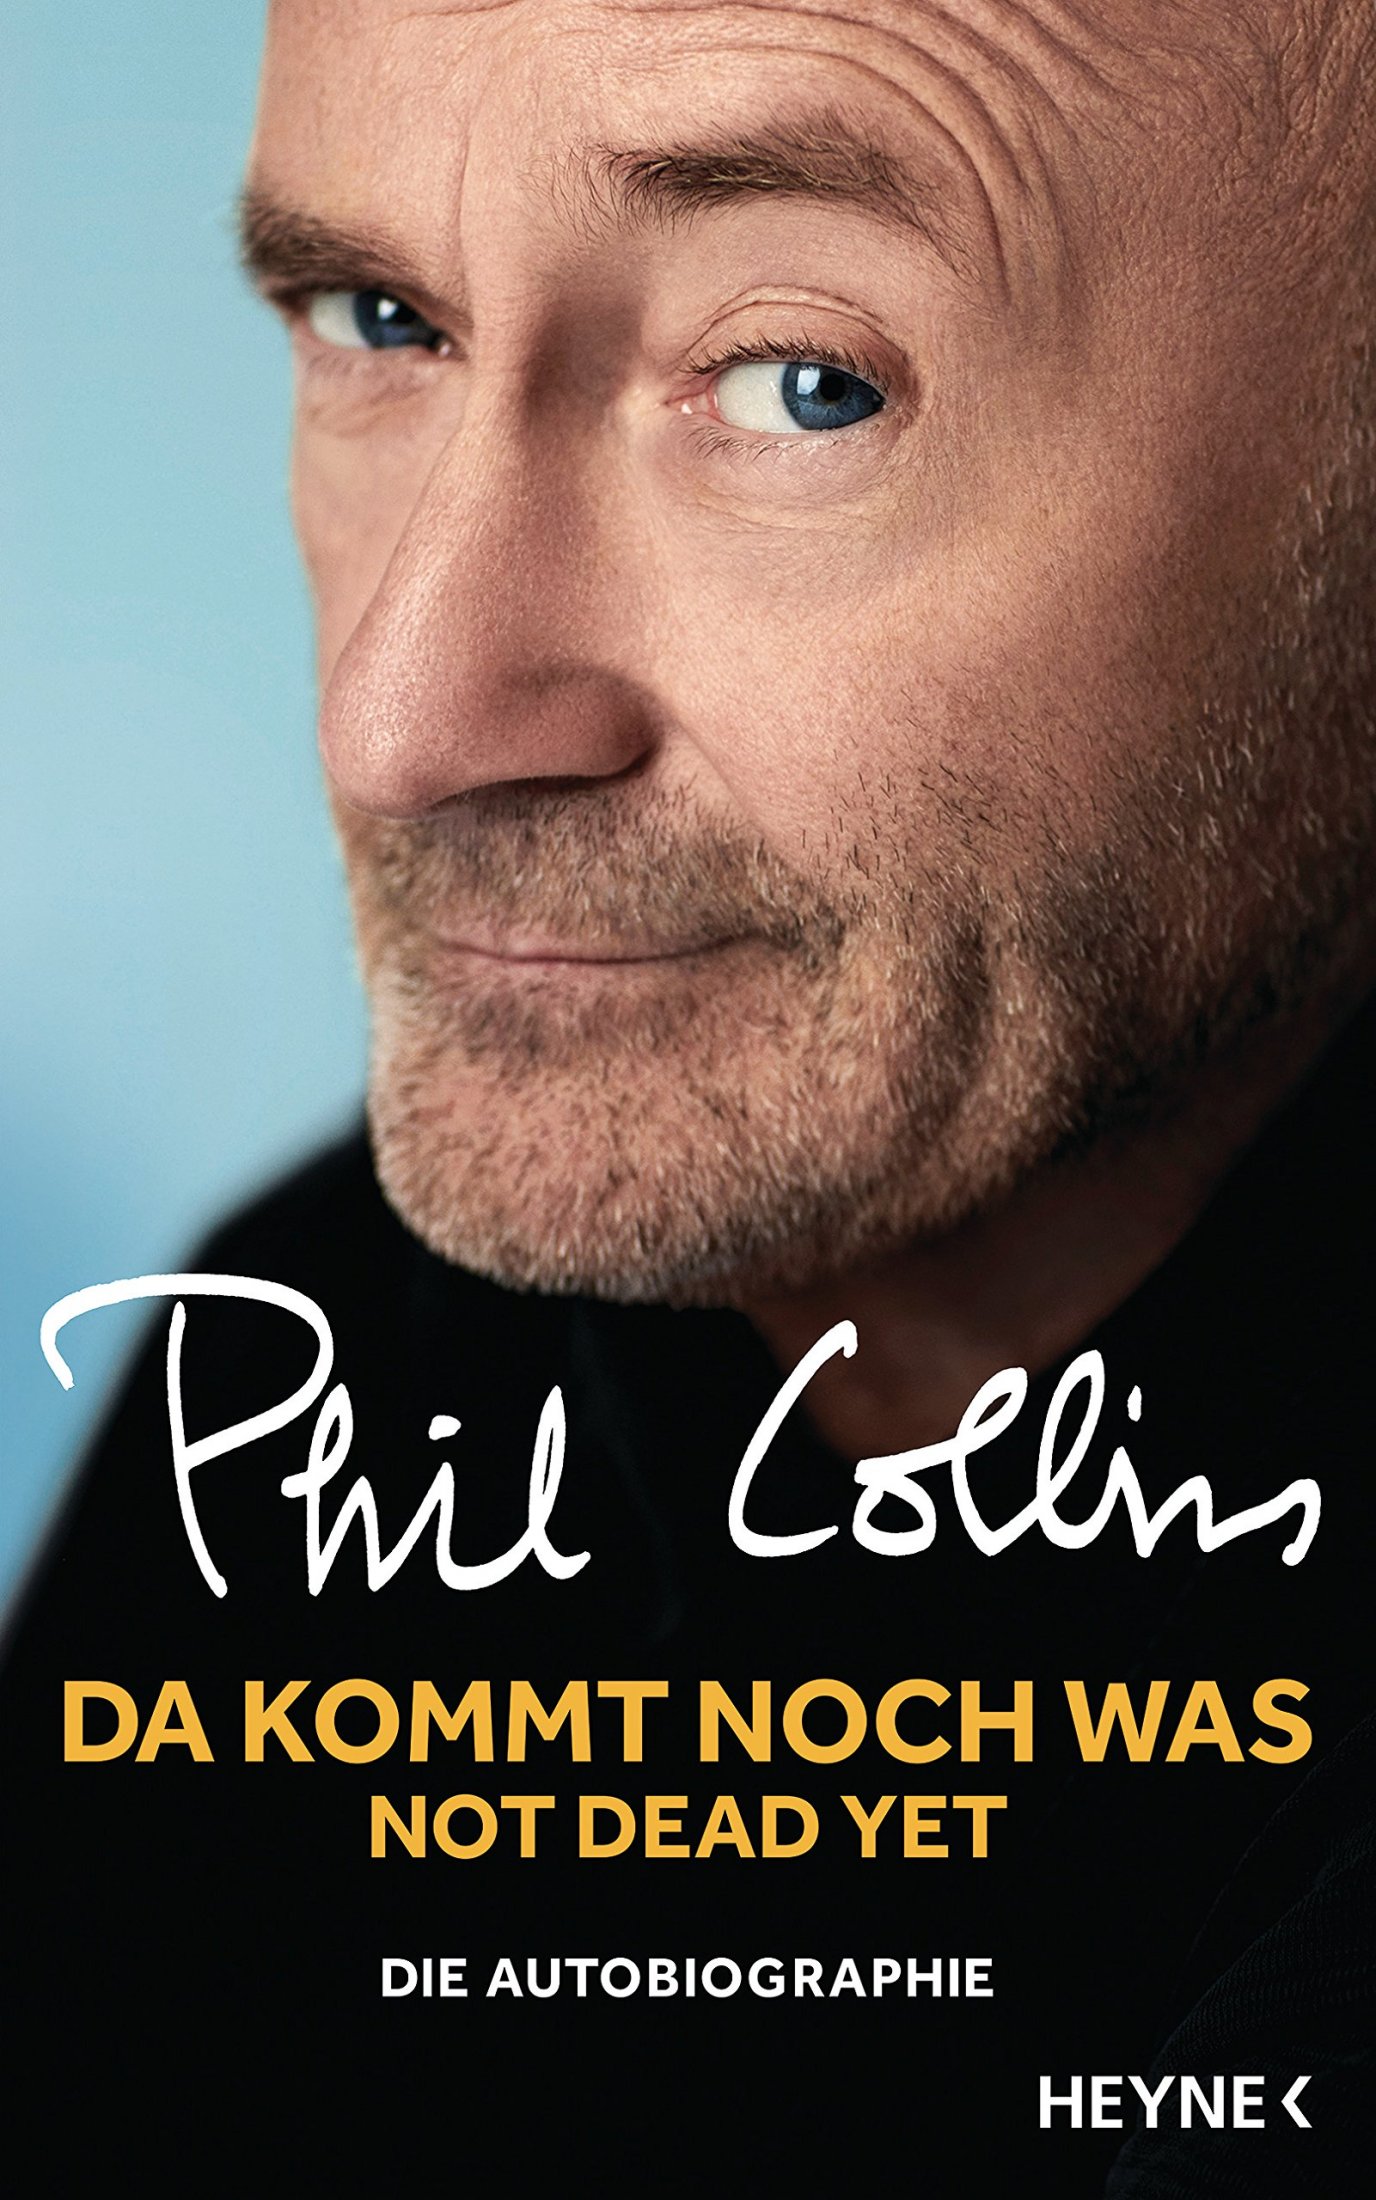 Phil Collins Not Dead Yet 01